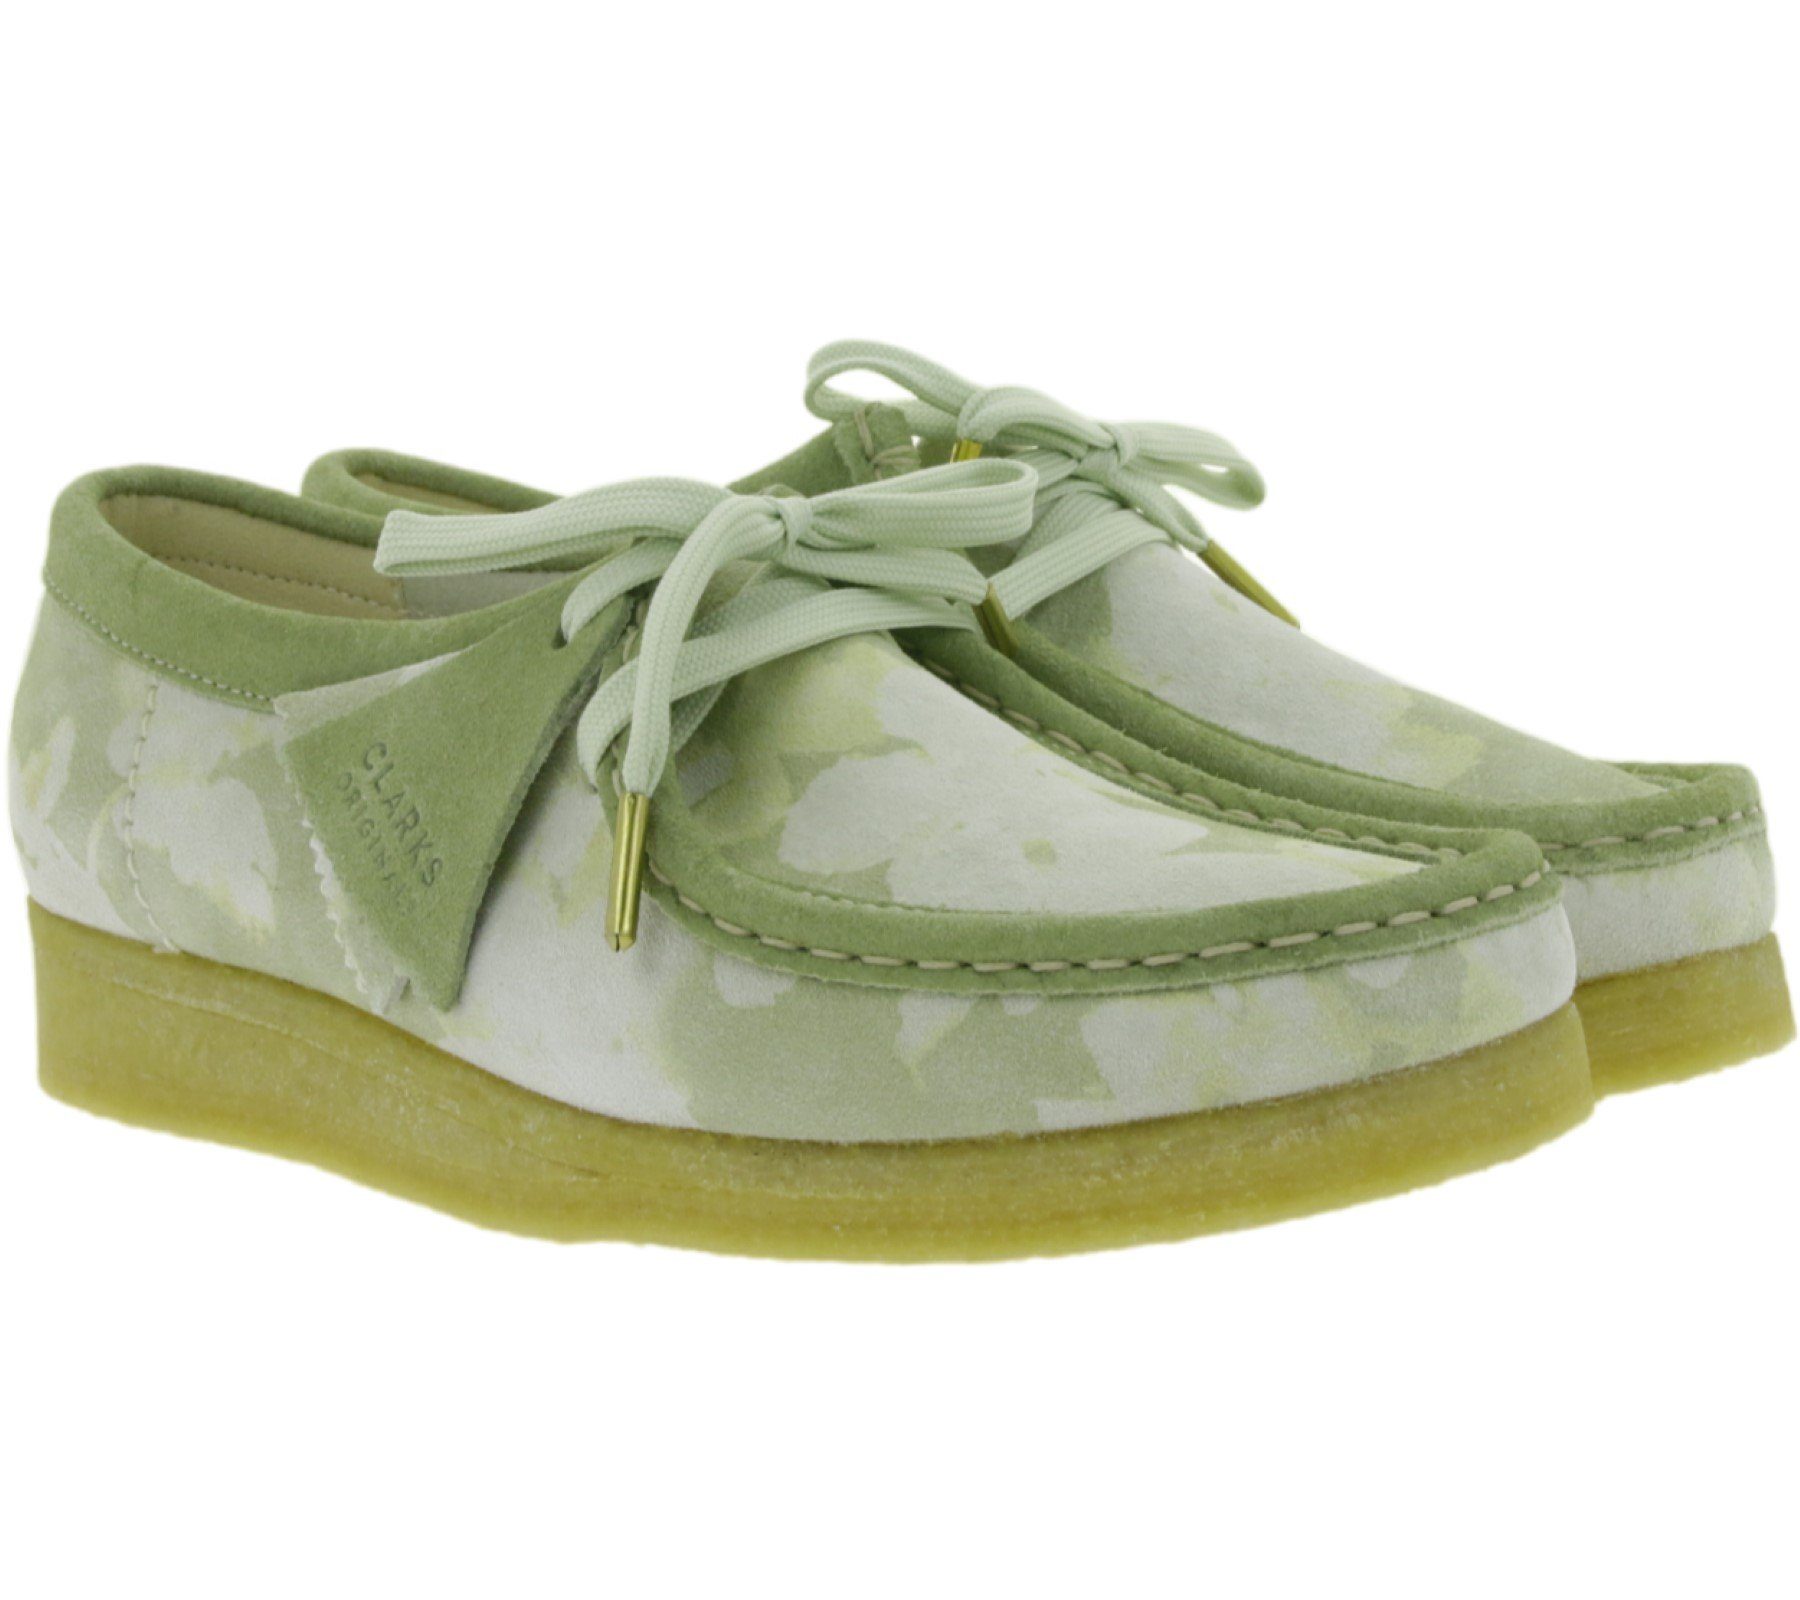 Clarks Clarks Originals Damen Schnürschuhe mit Muster Echtleder-Bootsschuhe Halbschuhe Grün Schnürschuh